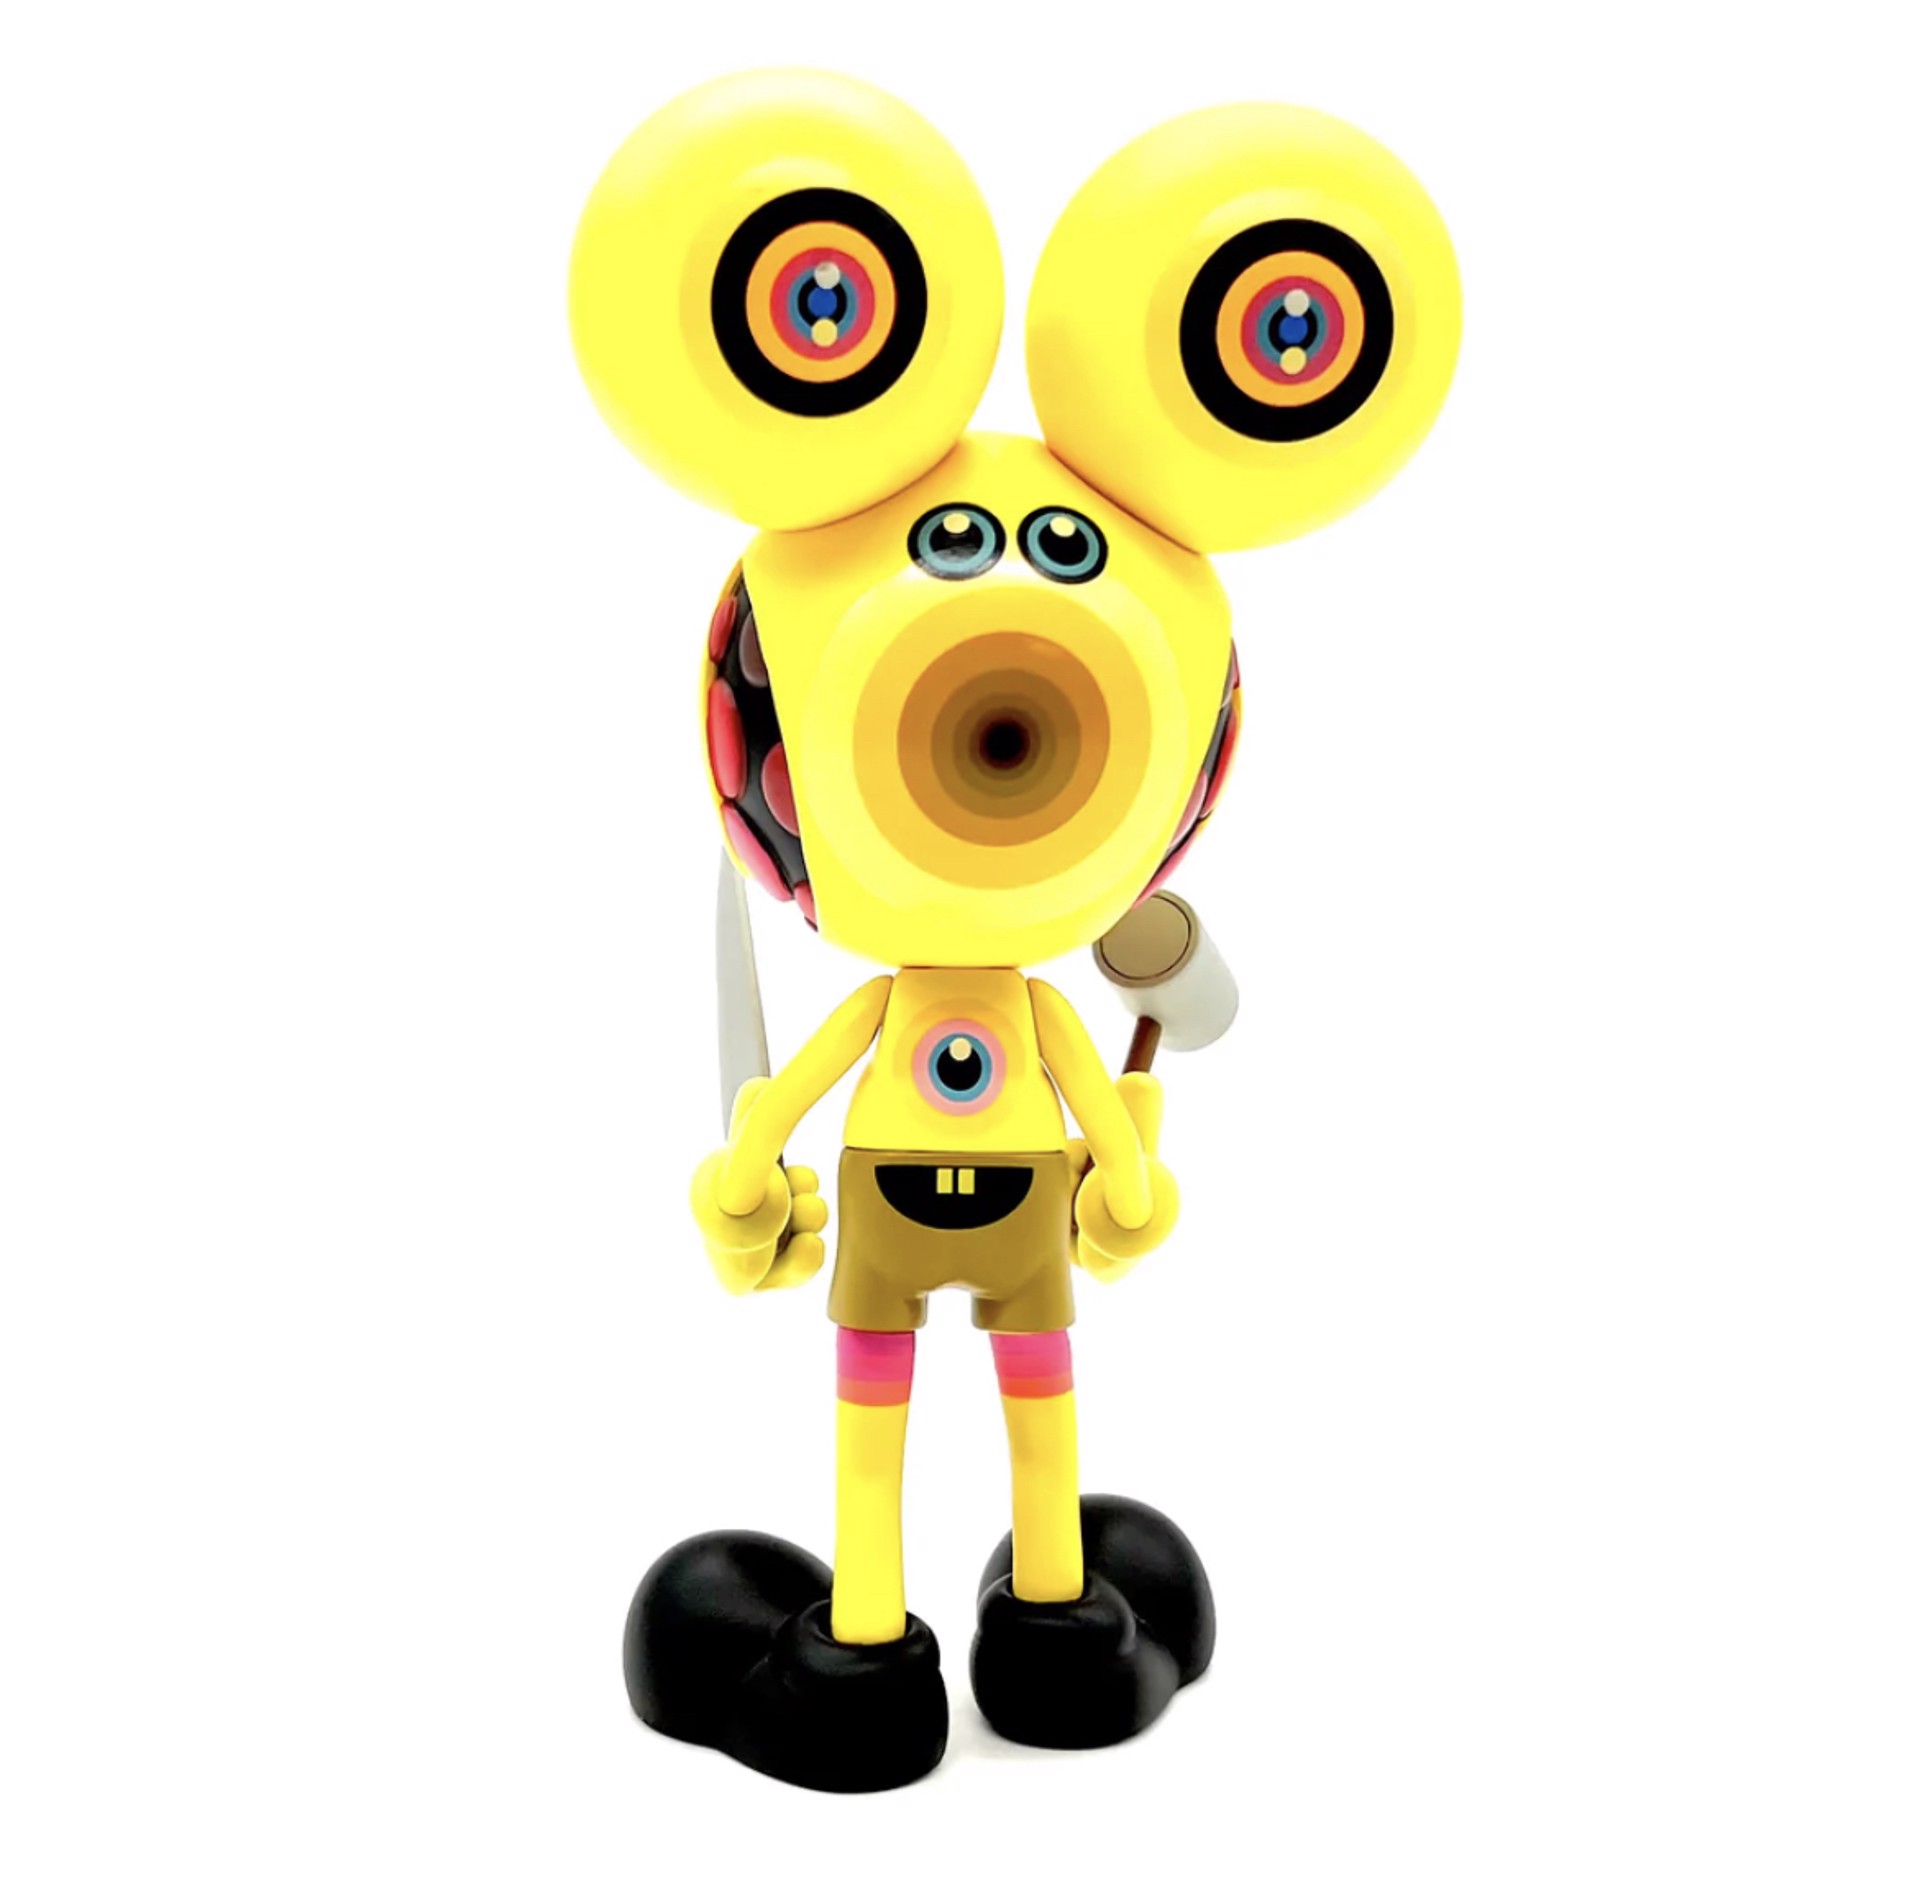 Spacemonkey Toy Series 2 (Happy Pants Yellow) by Dalek